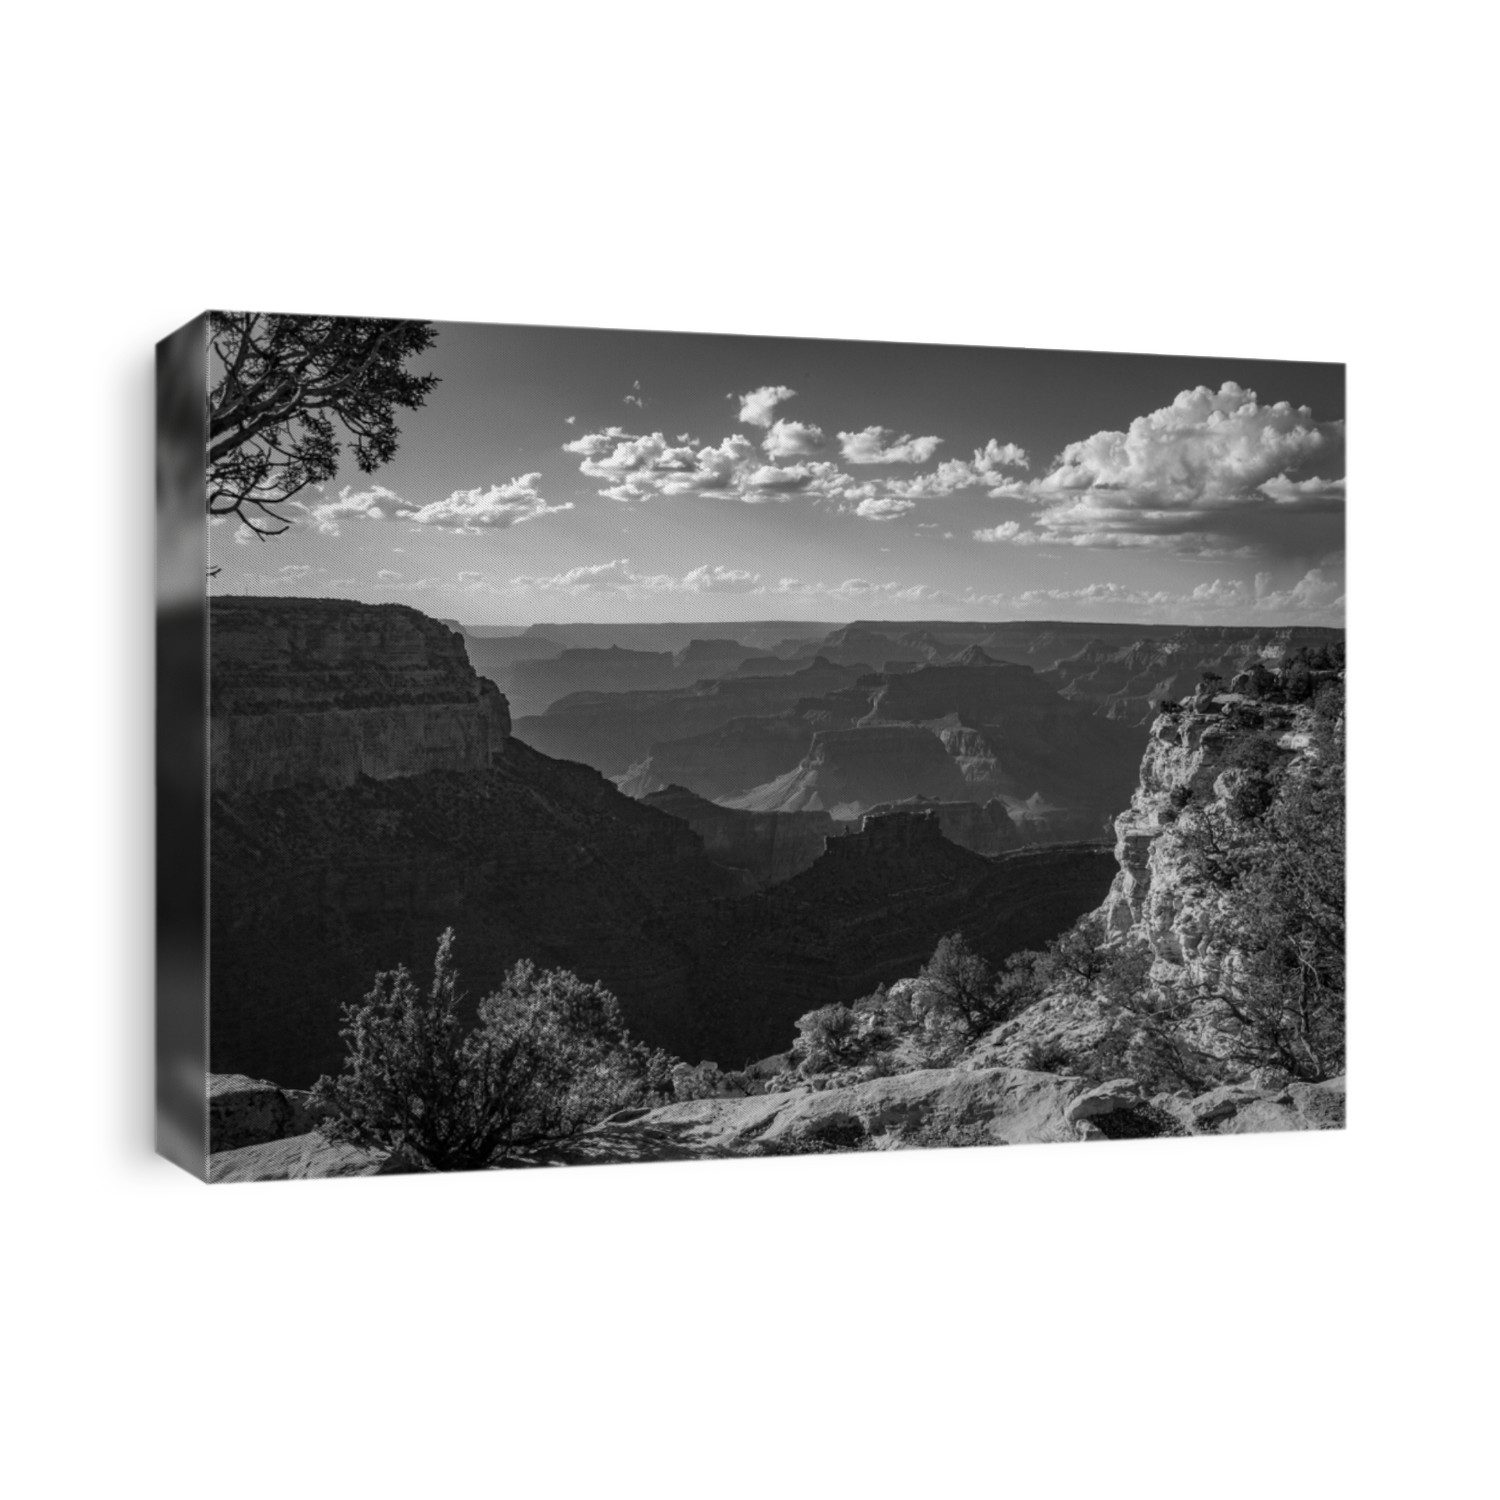 black and white landscape image of the grand canyon south rim arizona